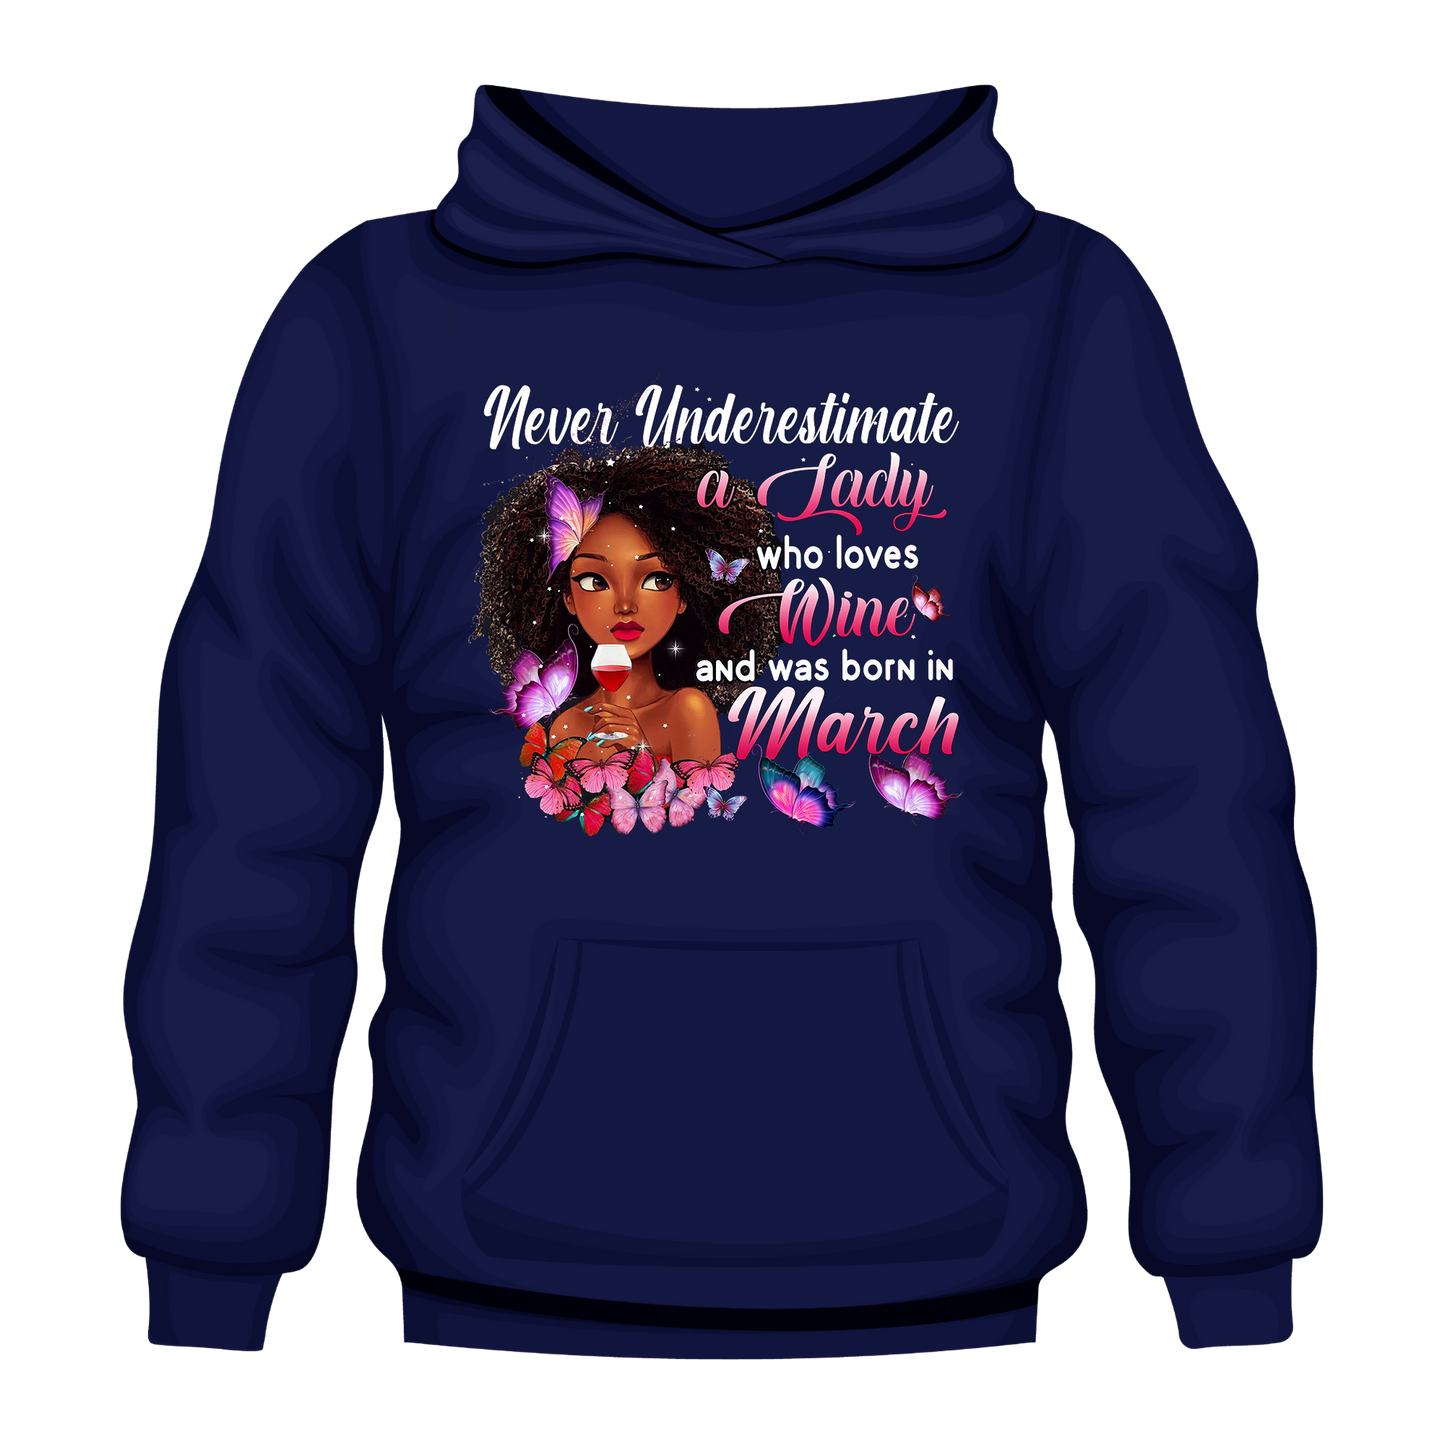 Lady Wine March Hooded Unisex Sweatshirt